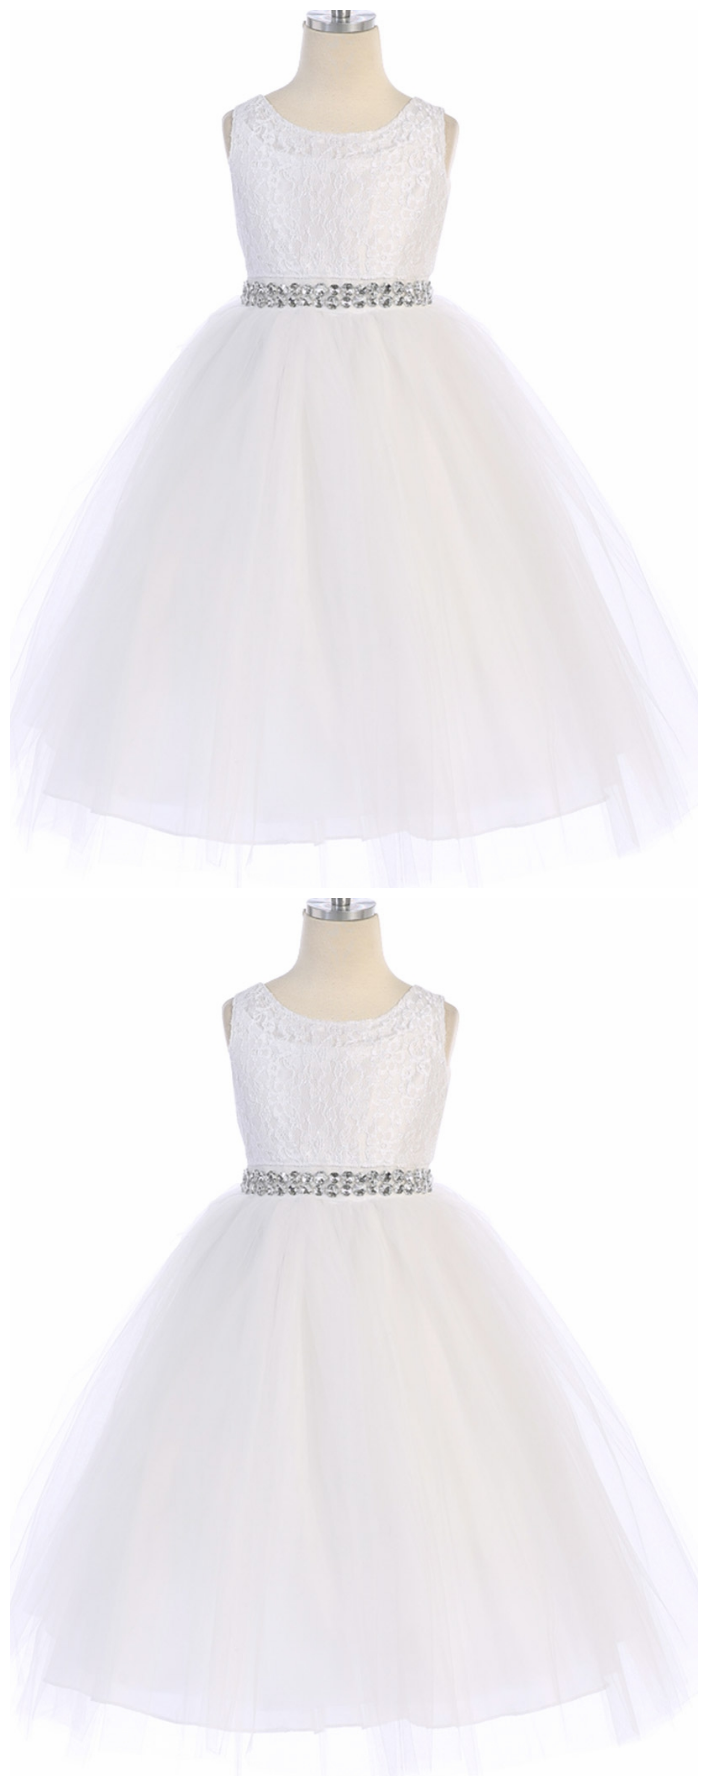 White Lace & Tulle Dress W/ Rhinestone Belt